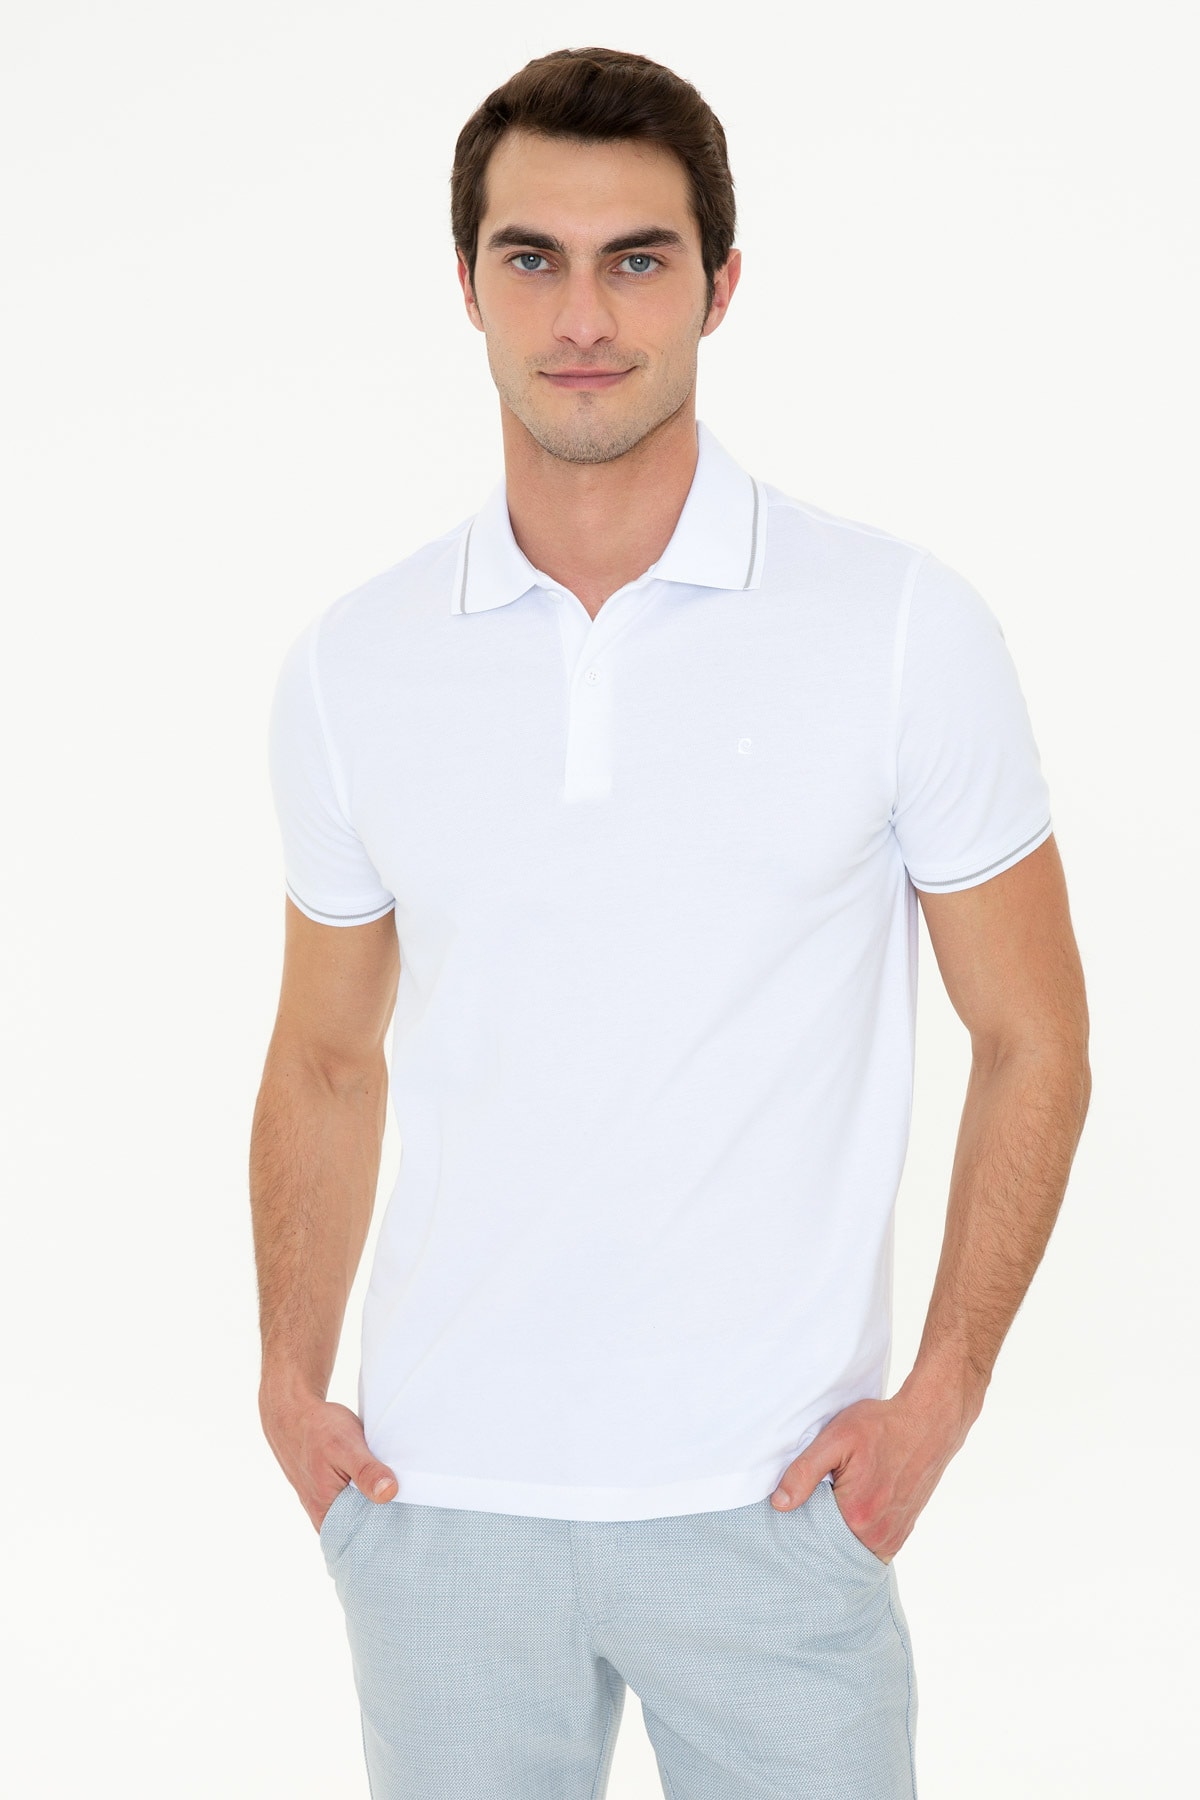 Pierre Cardin Erkek Beyaz T-Shirt G021Gl011.000.1431626